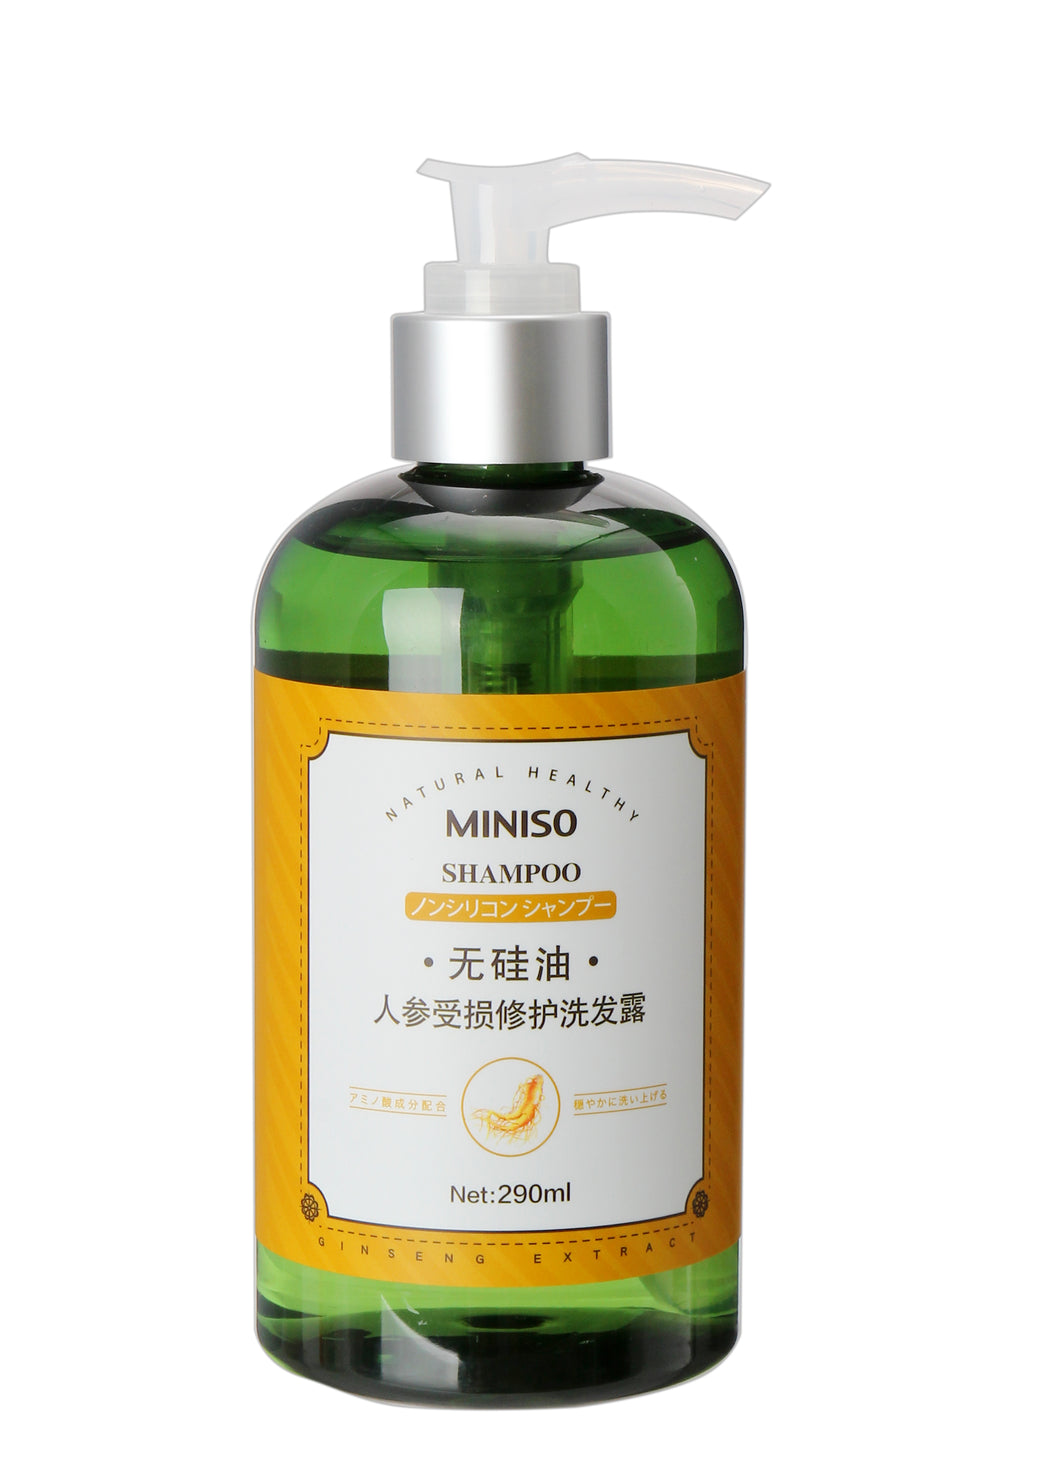 Silicone-free Ginseng Repairing Shampoo